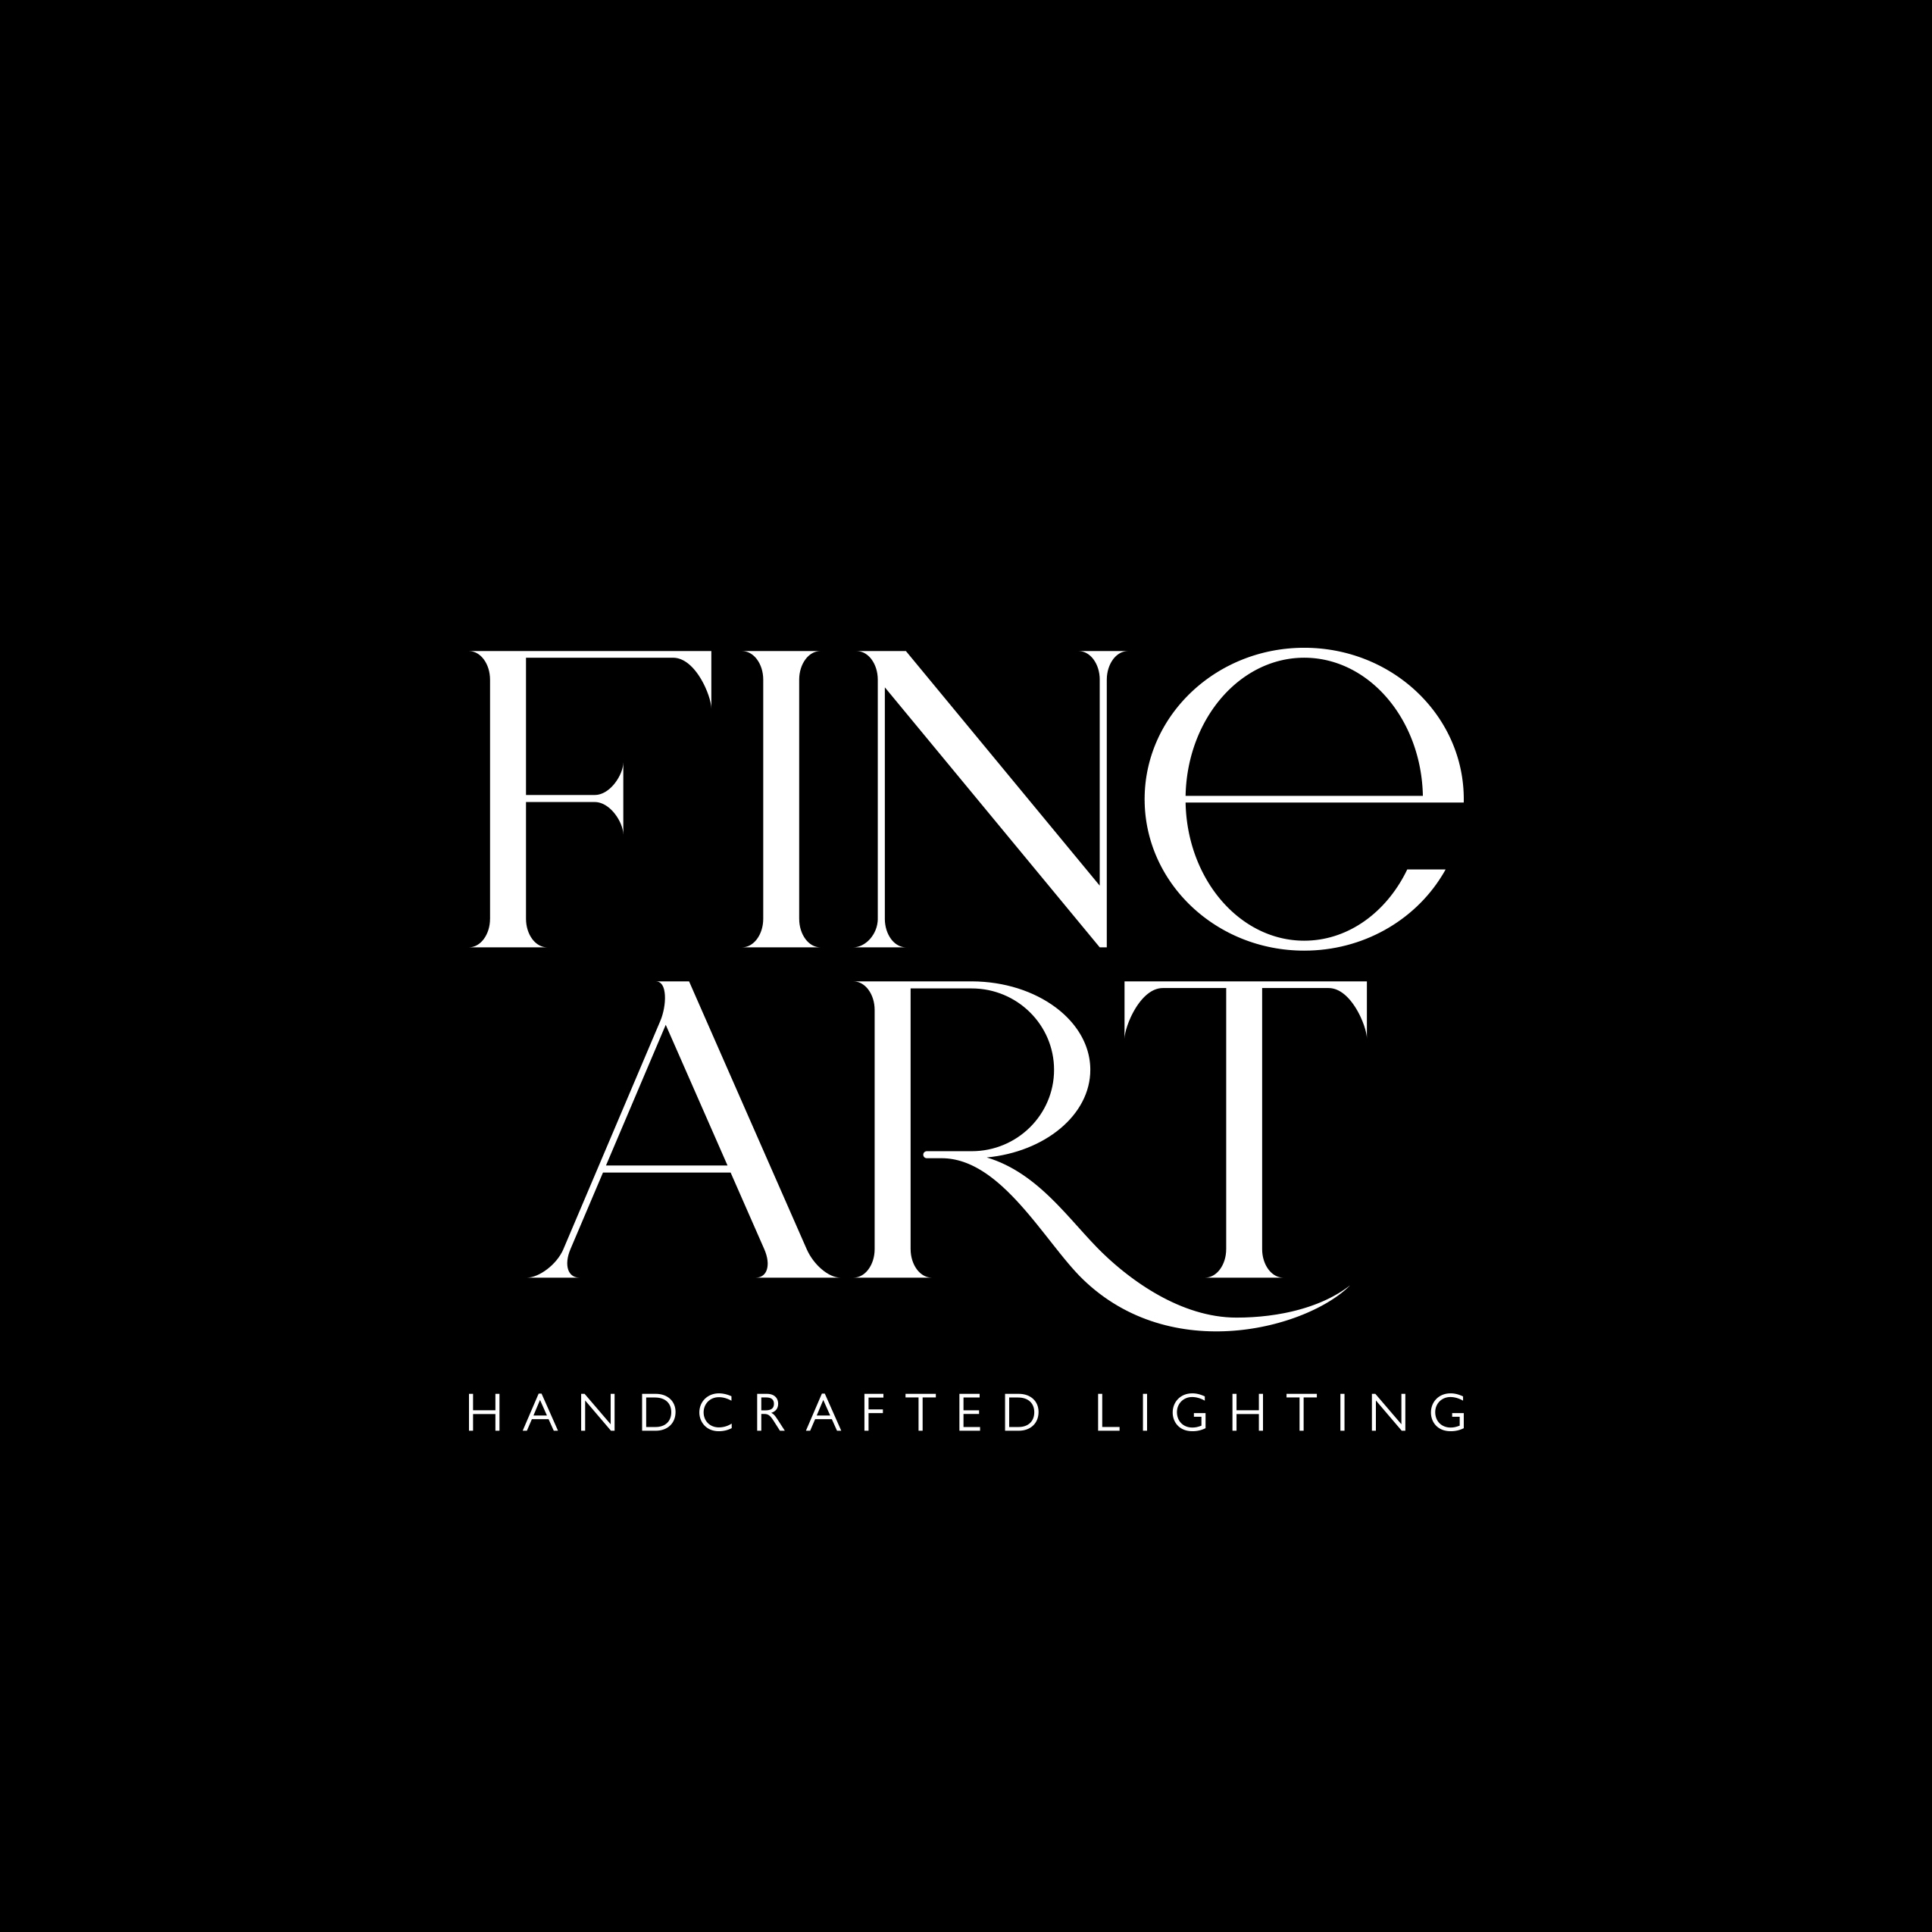 FINE ART HANDCRAFTED LIGHTING